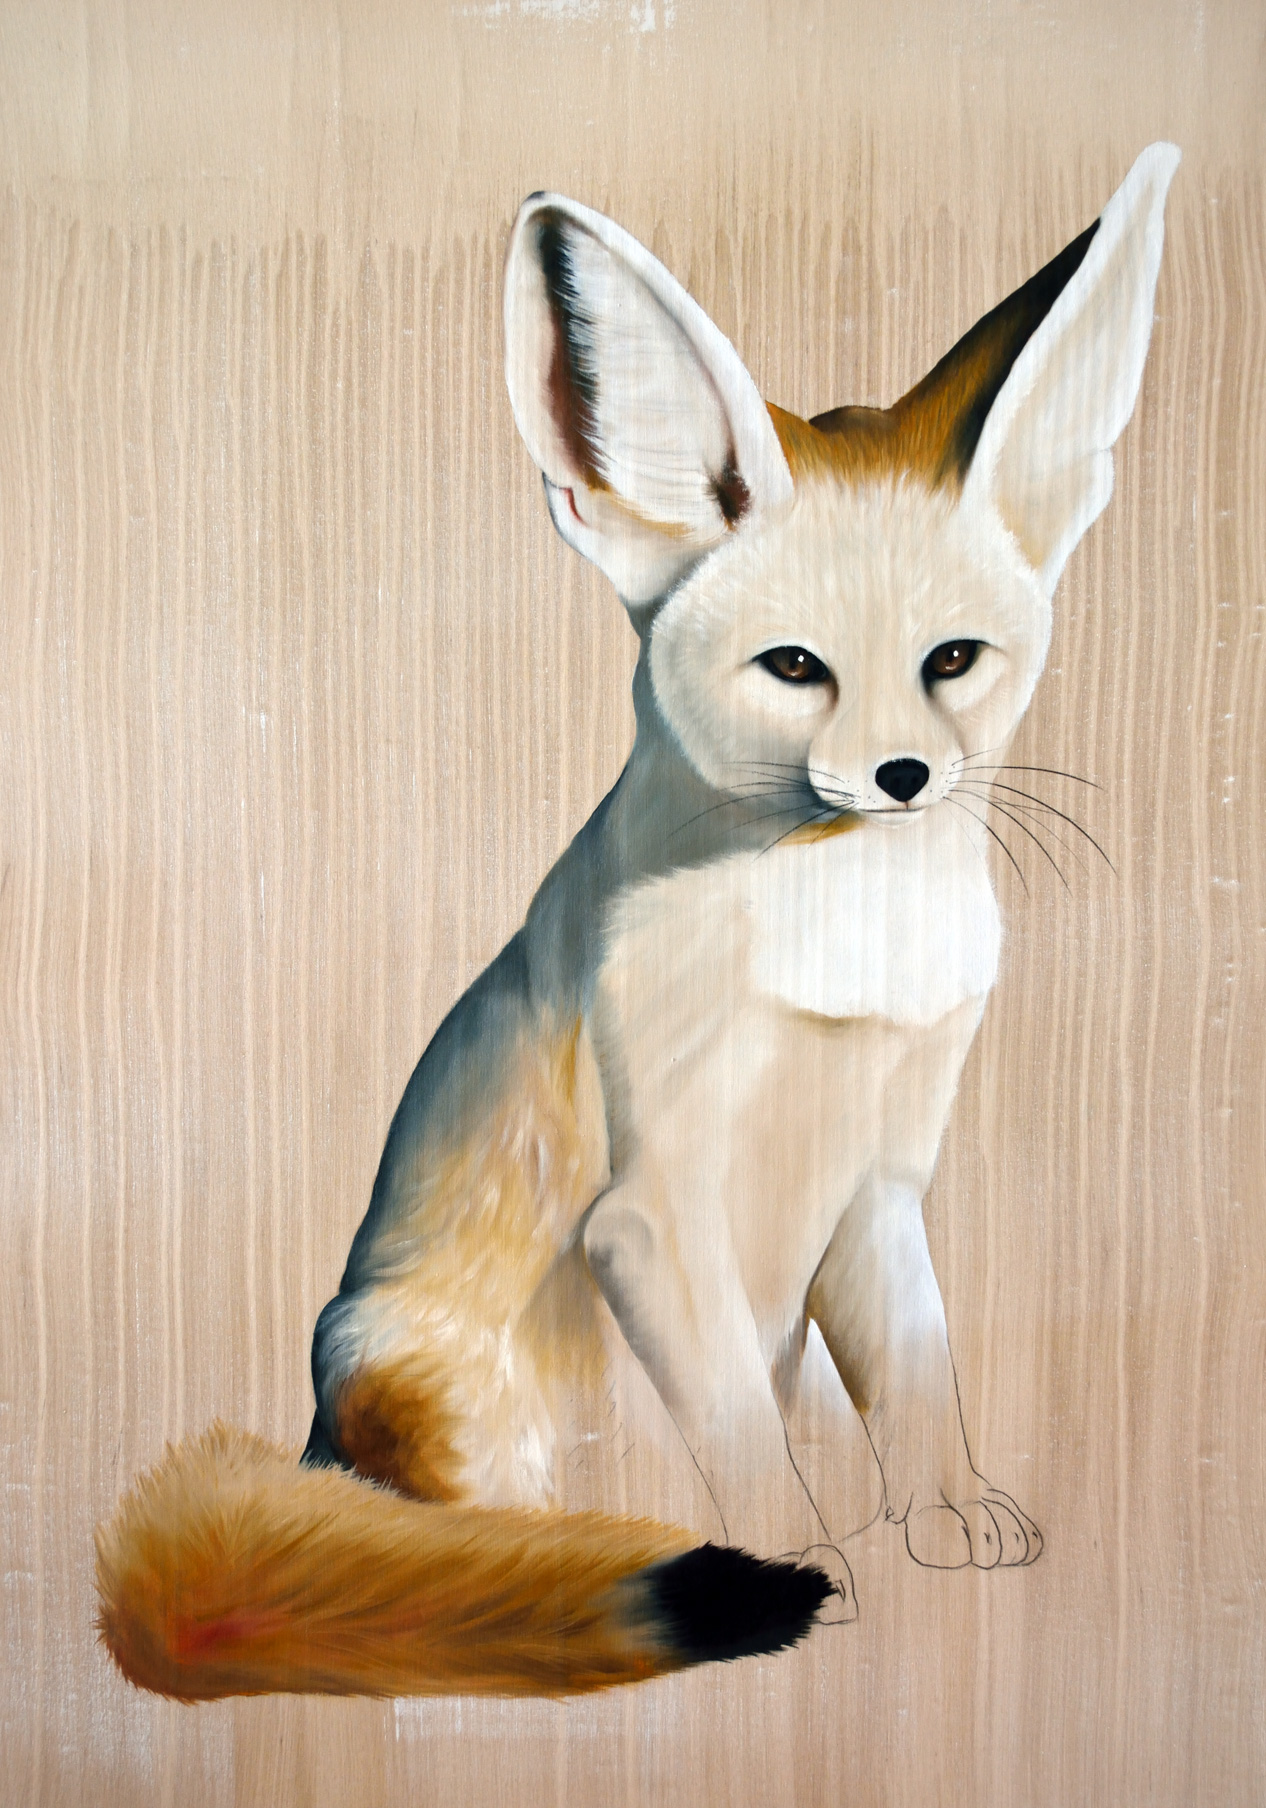 VULPUS-ZERDA animal-painting Thierry Bisch Contemporary painter animals painting art  nature biodiversity conservation 